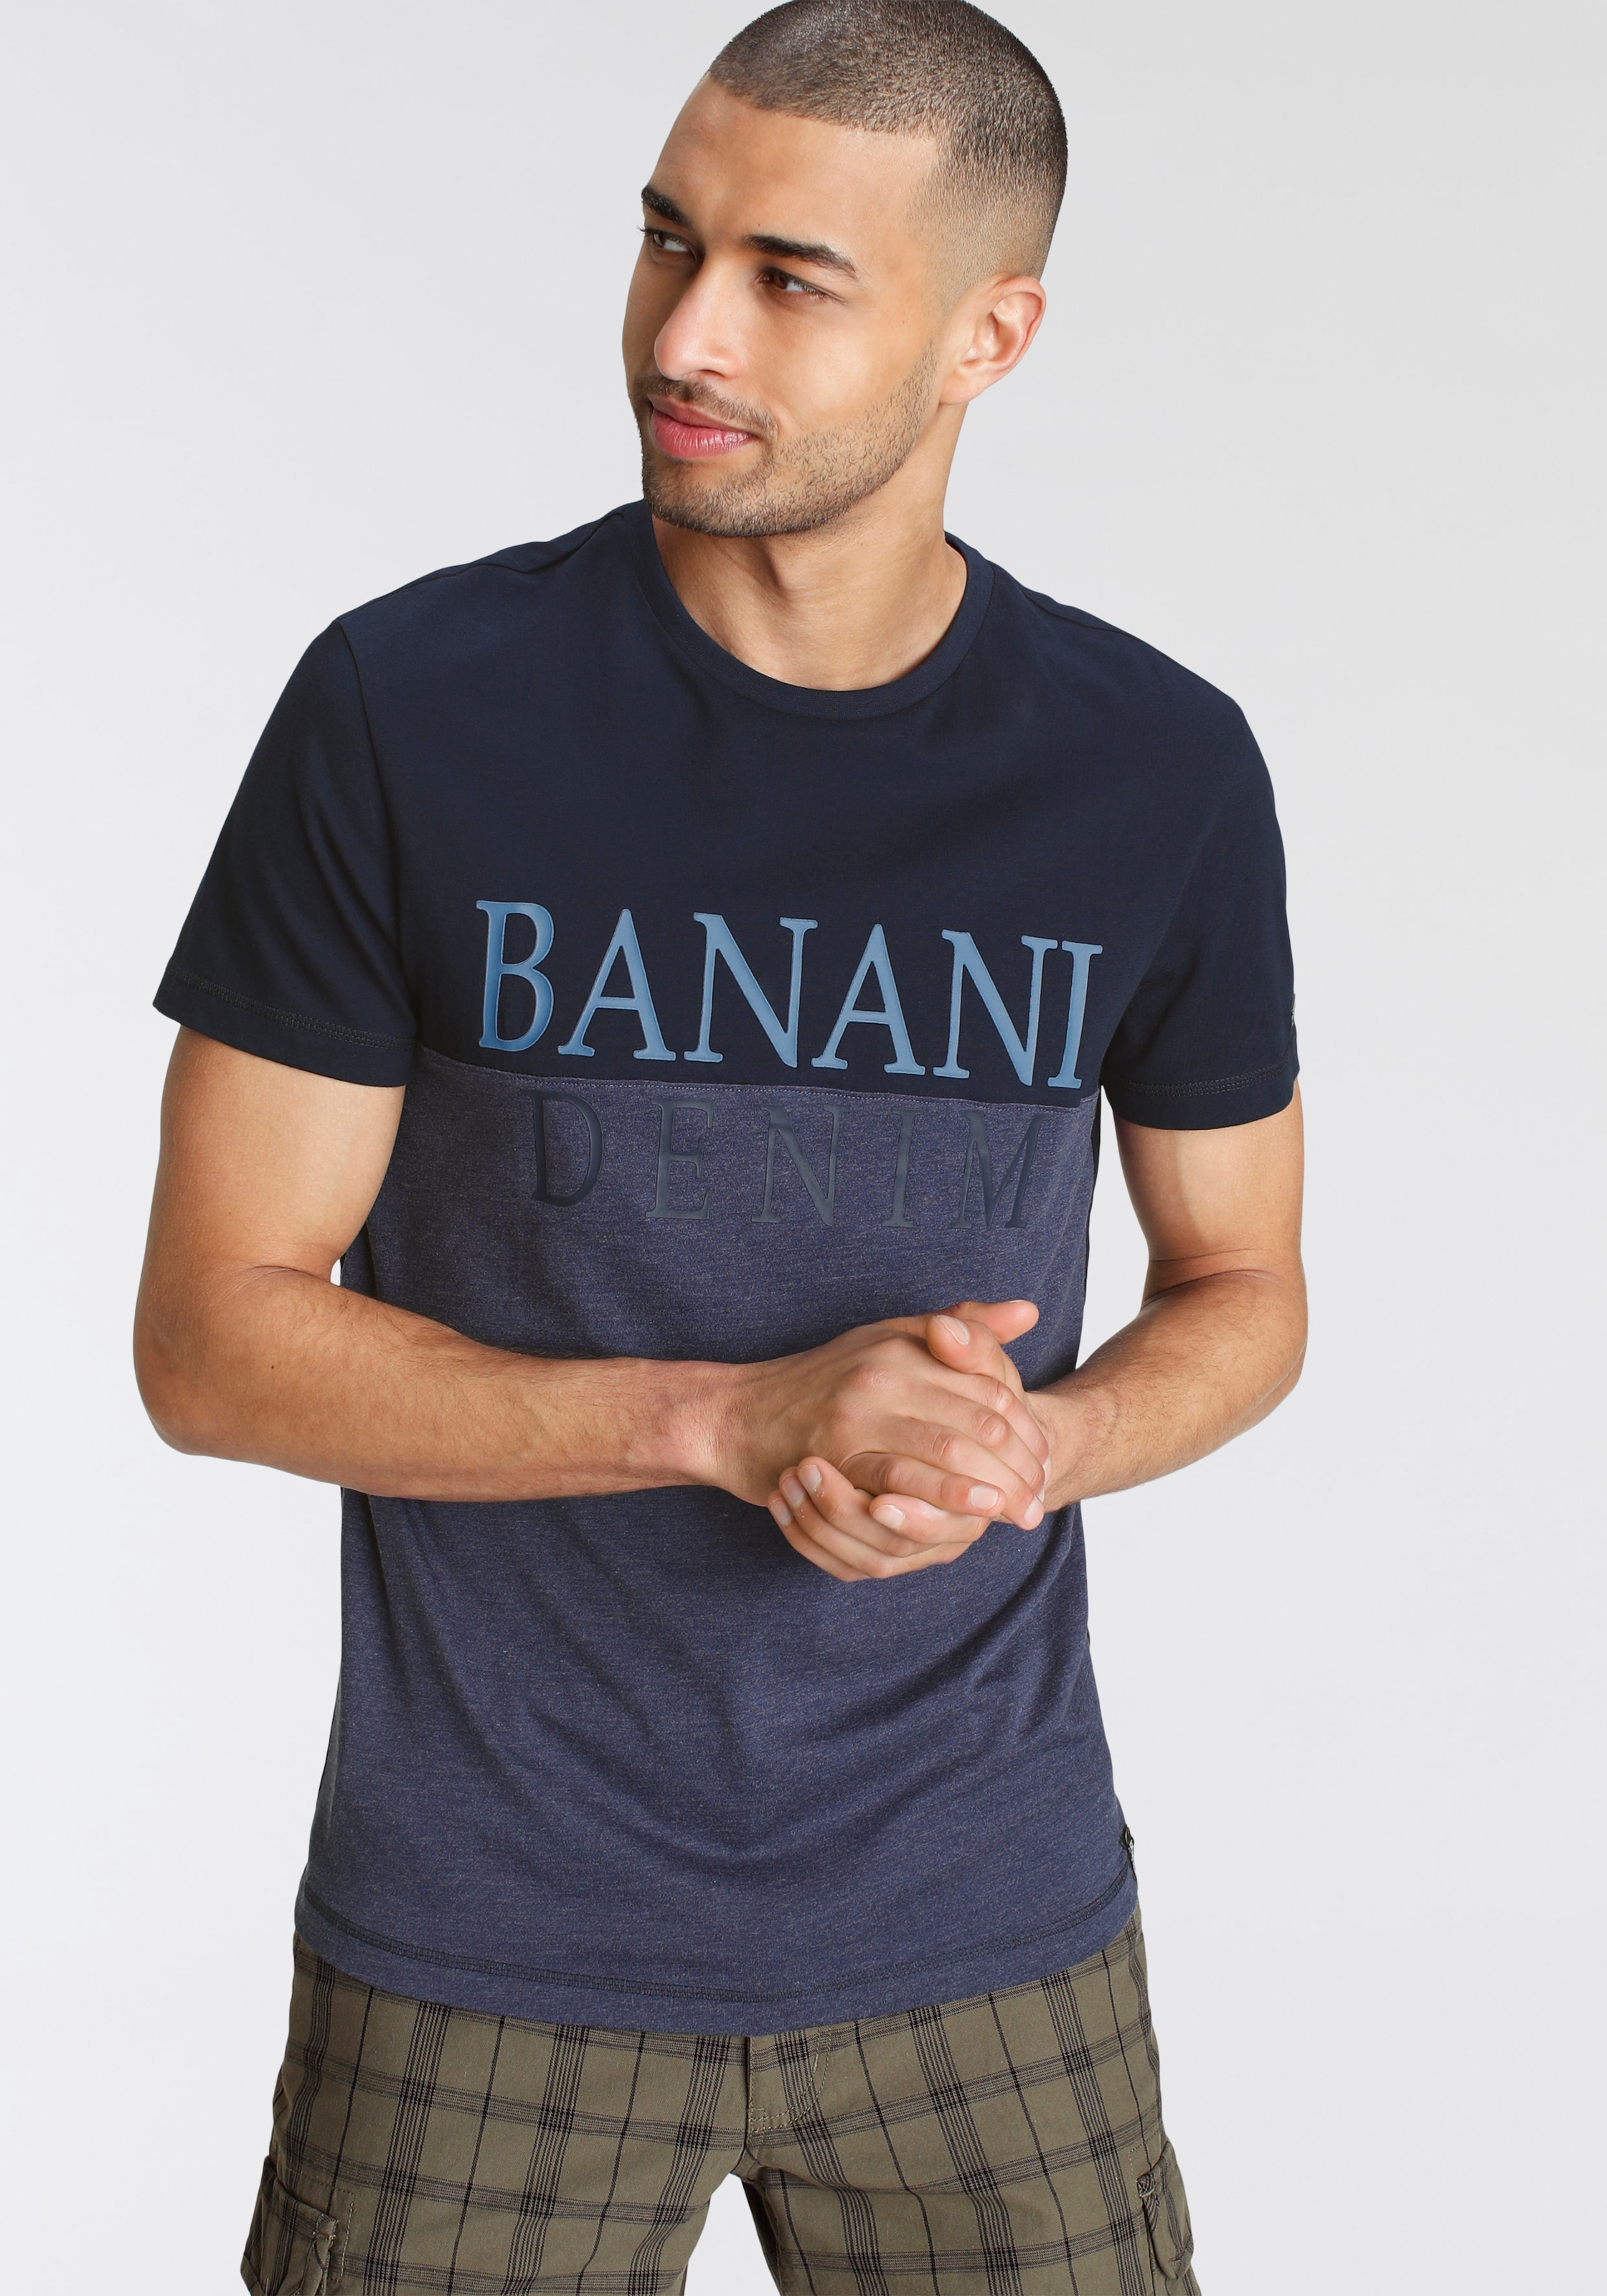 Banani T-Shirt bei ♕ Bruno